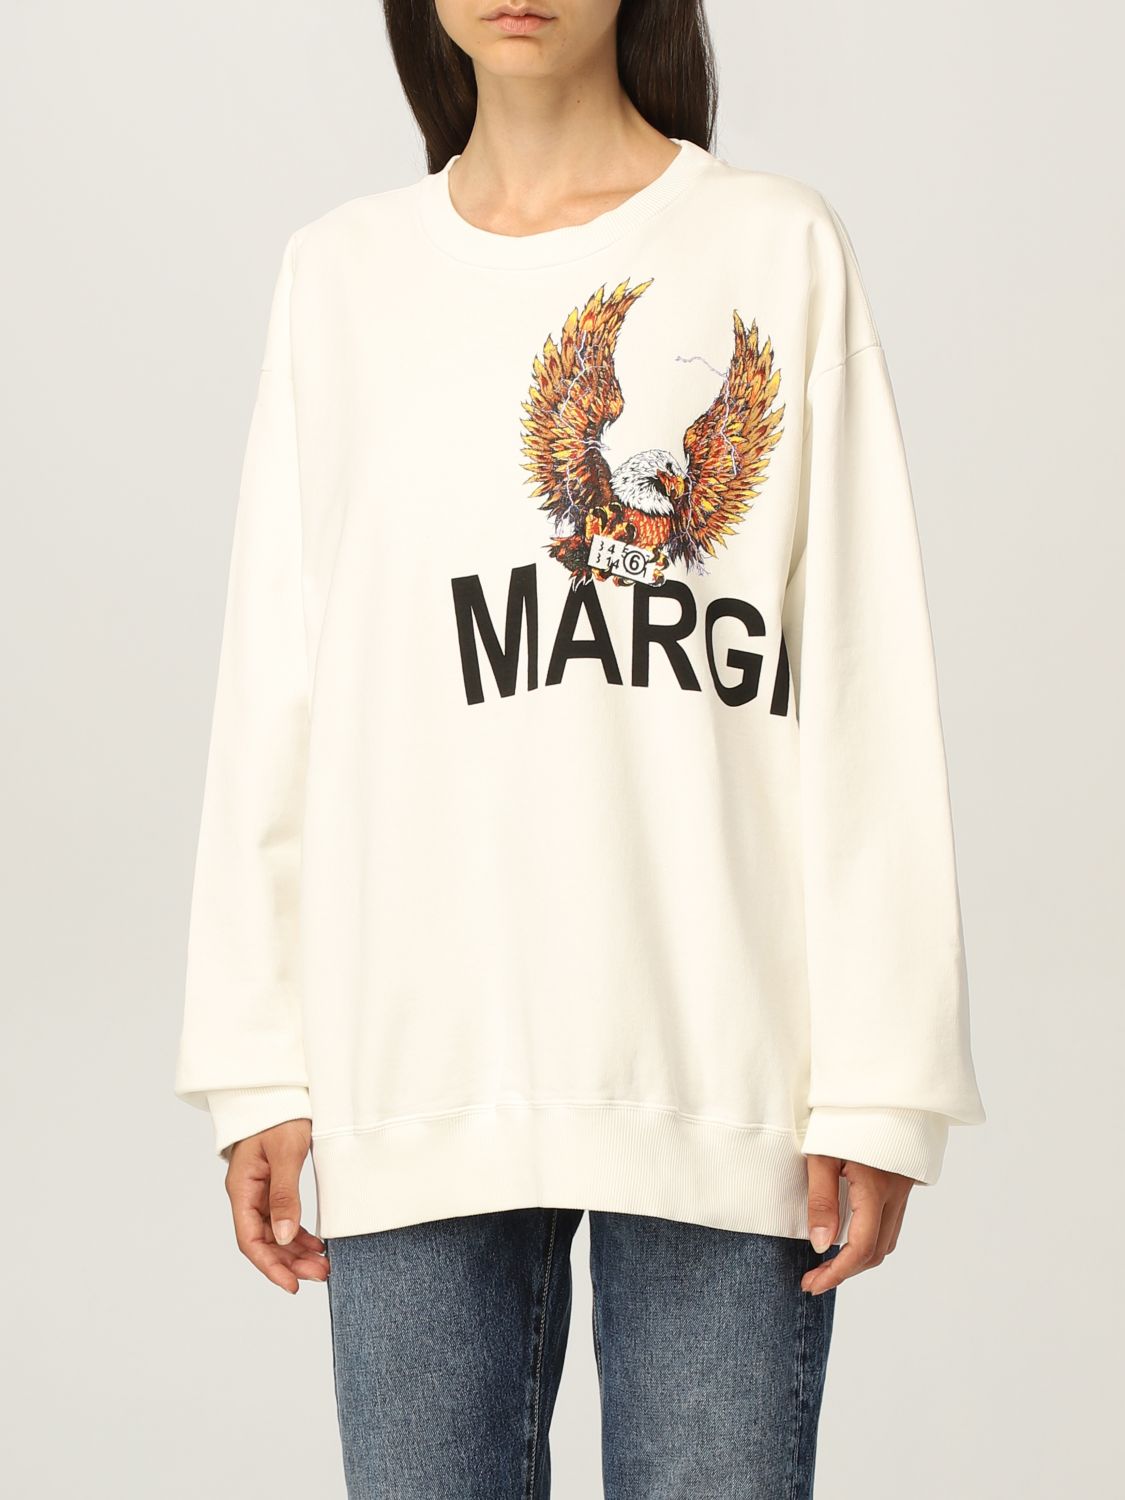 Mm6 Maison Margiela sweatshirt with eagle print